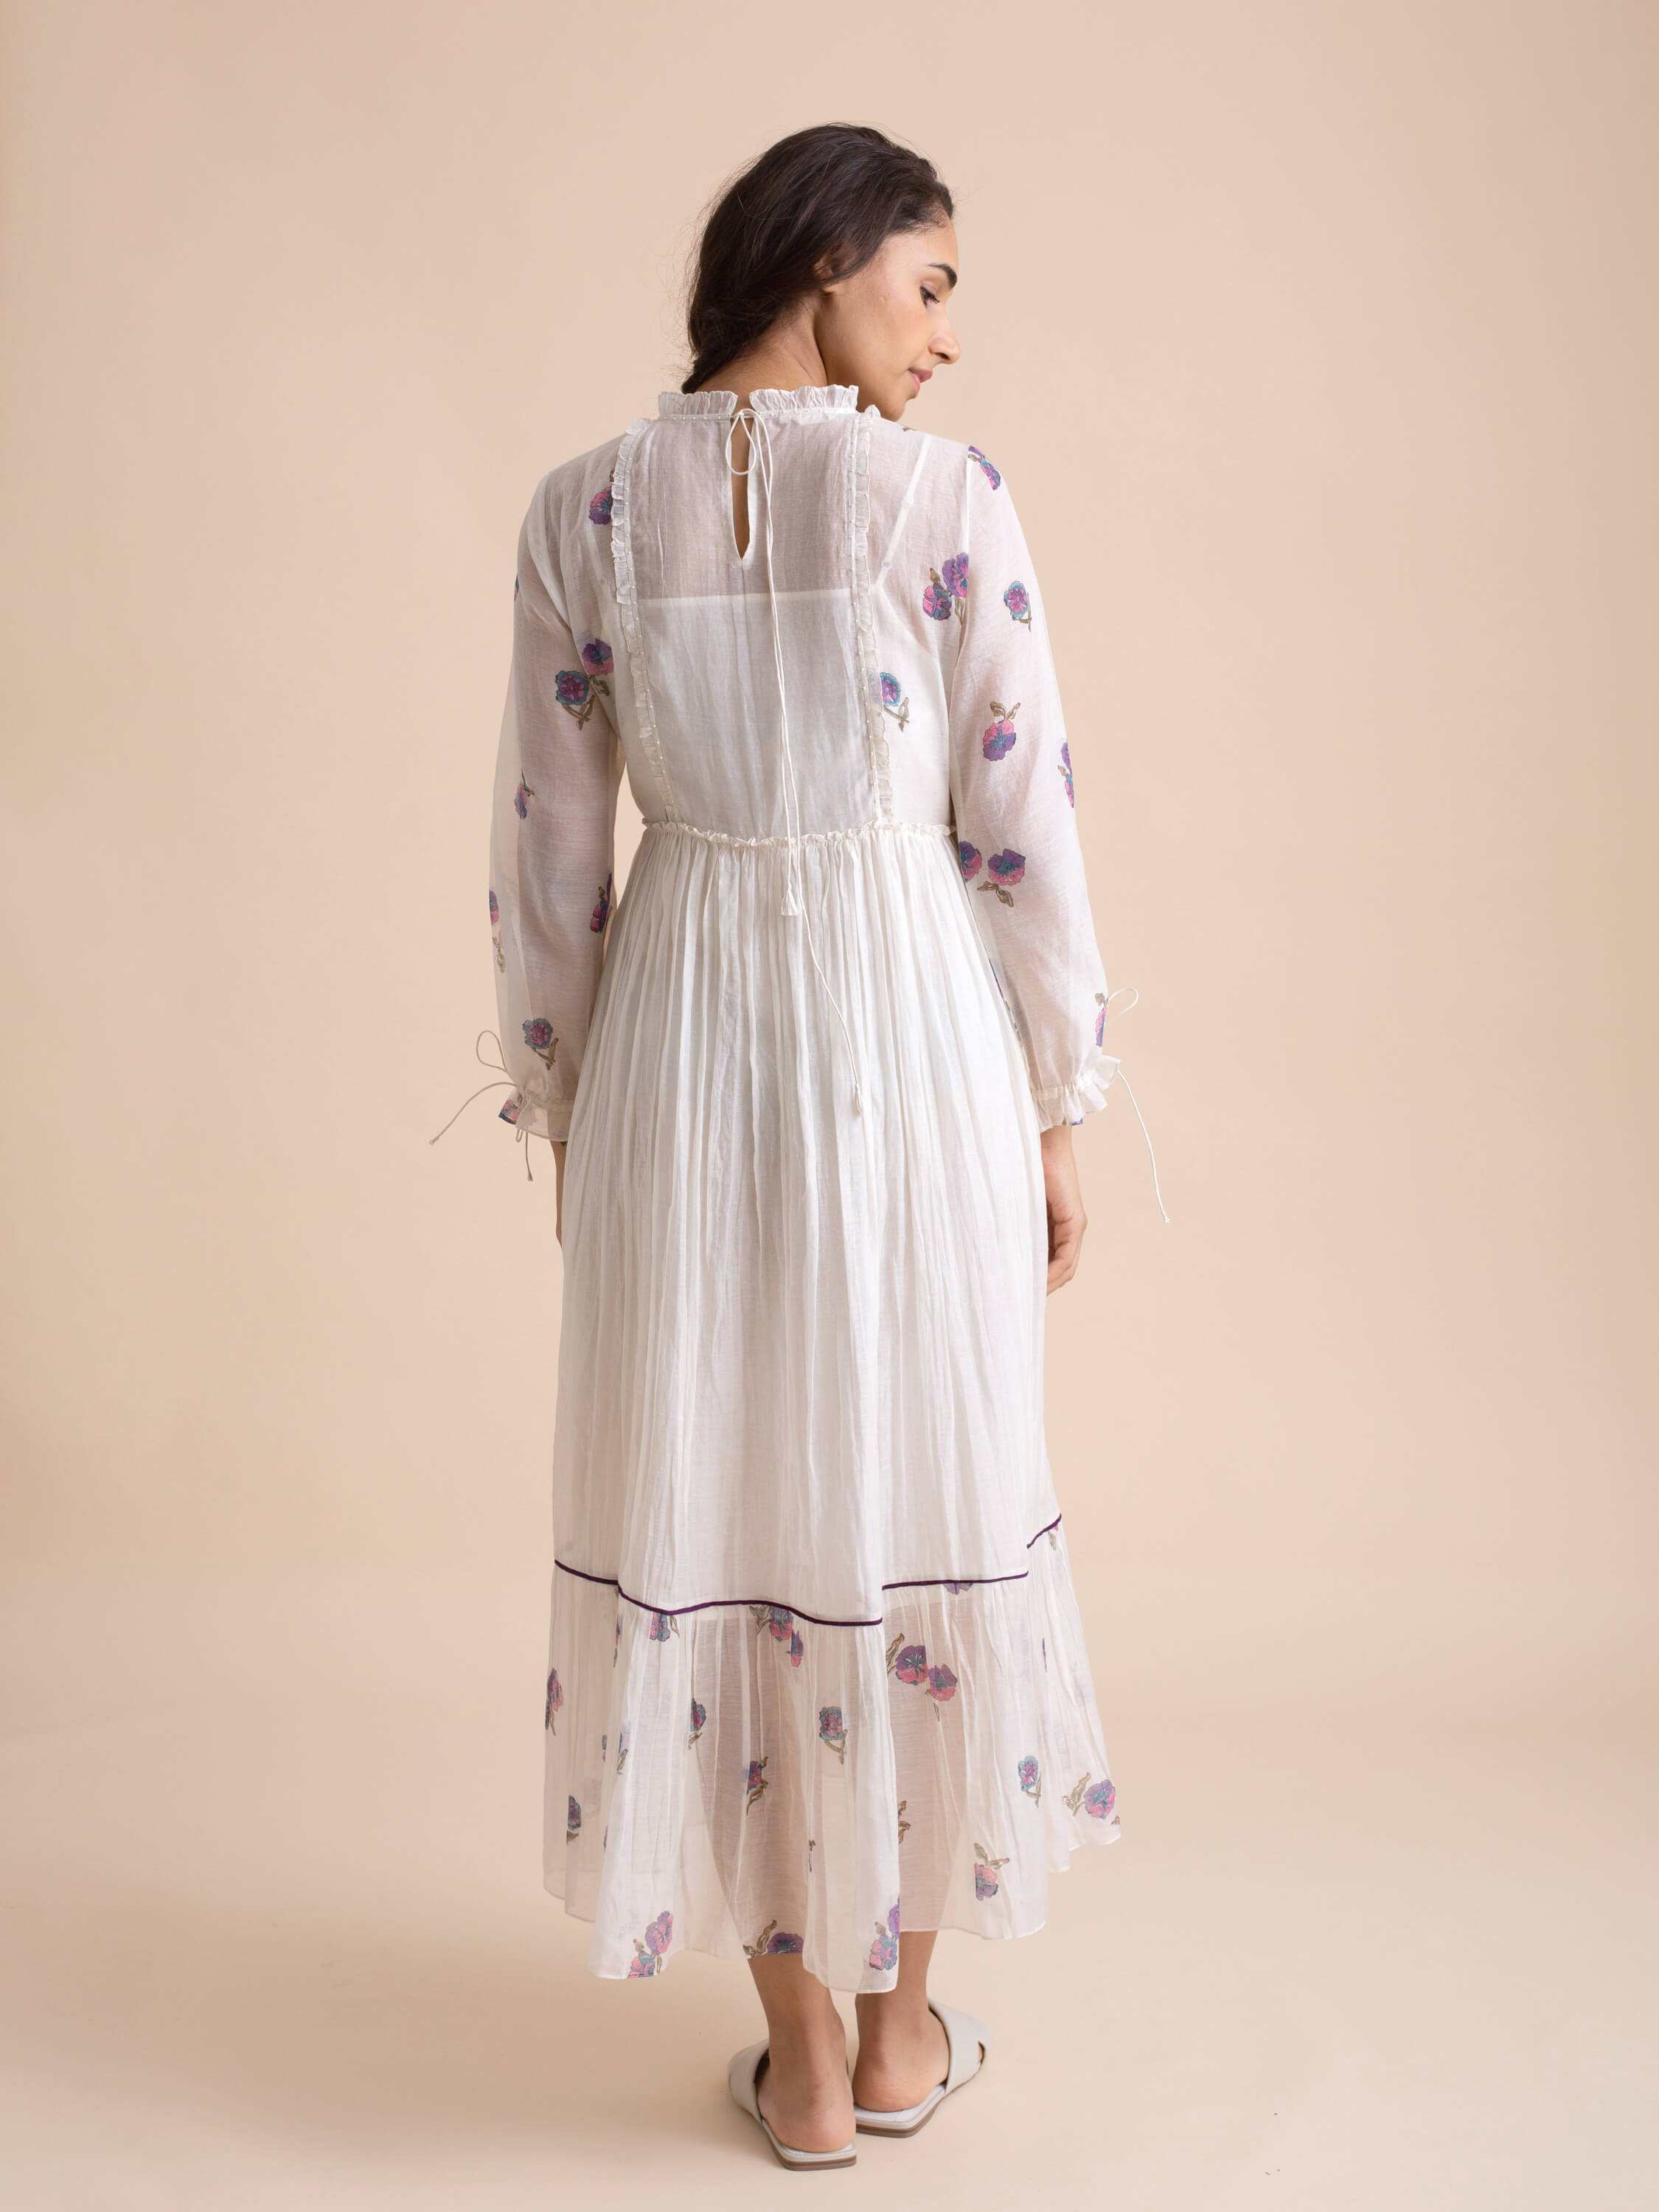 Violets Ribbon Dress - Image 4